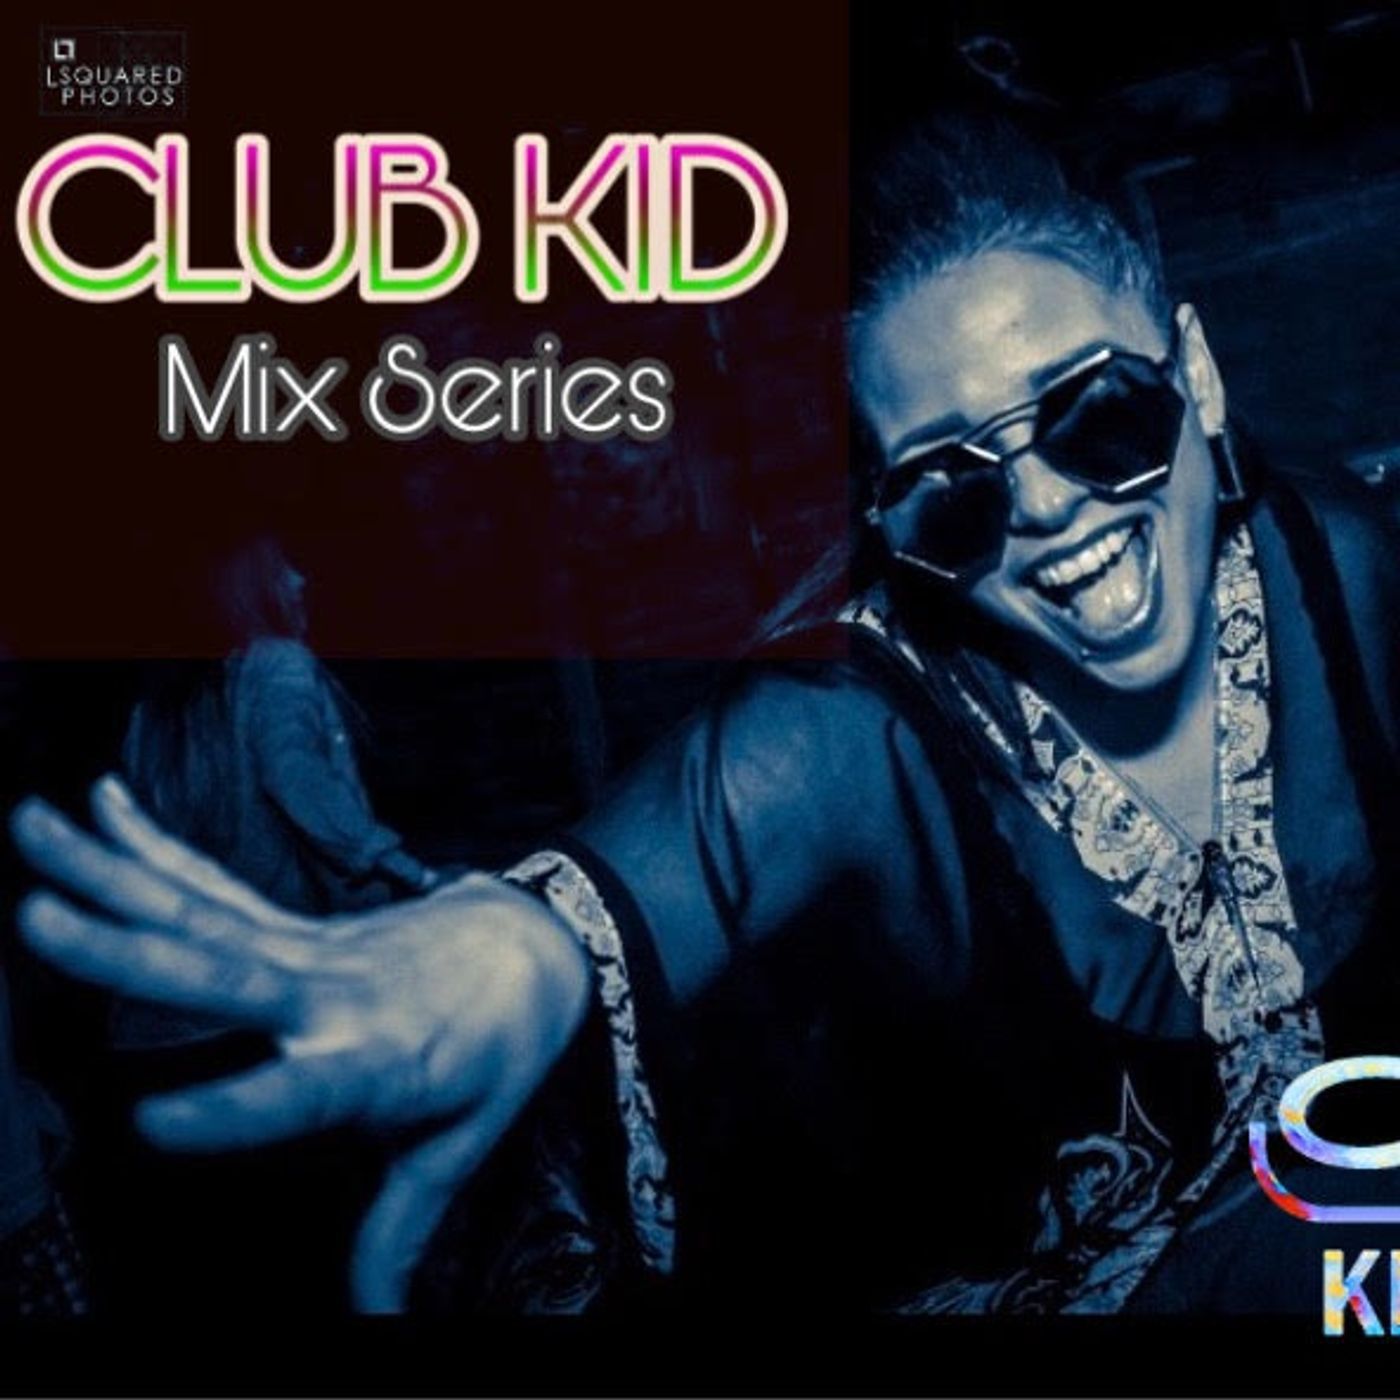 LOLO Knows Club Kid Mix Series... LOLO, LOLO KNOWS, Charivari Detroit, Cleveland/Akron